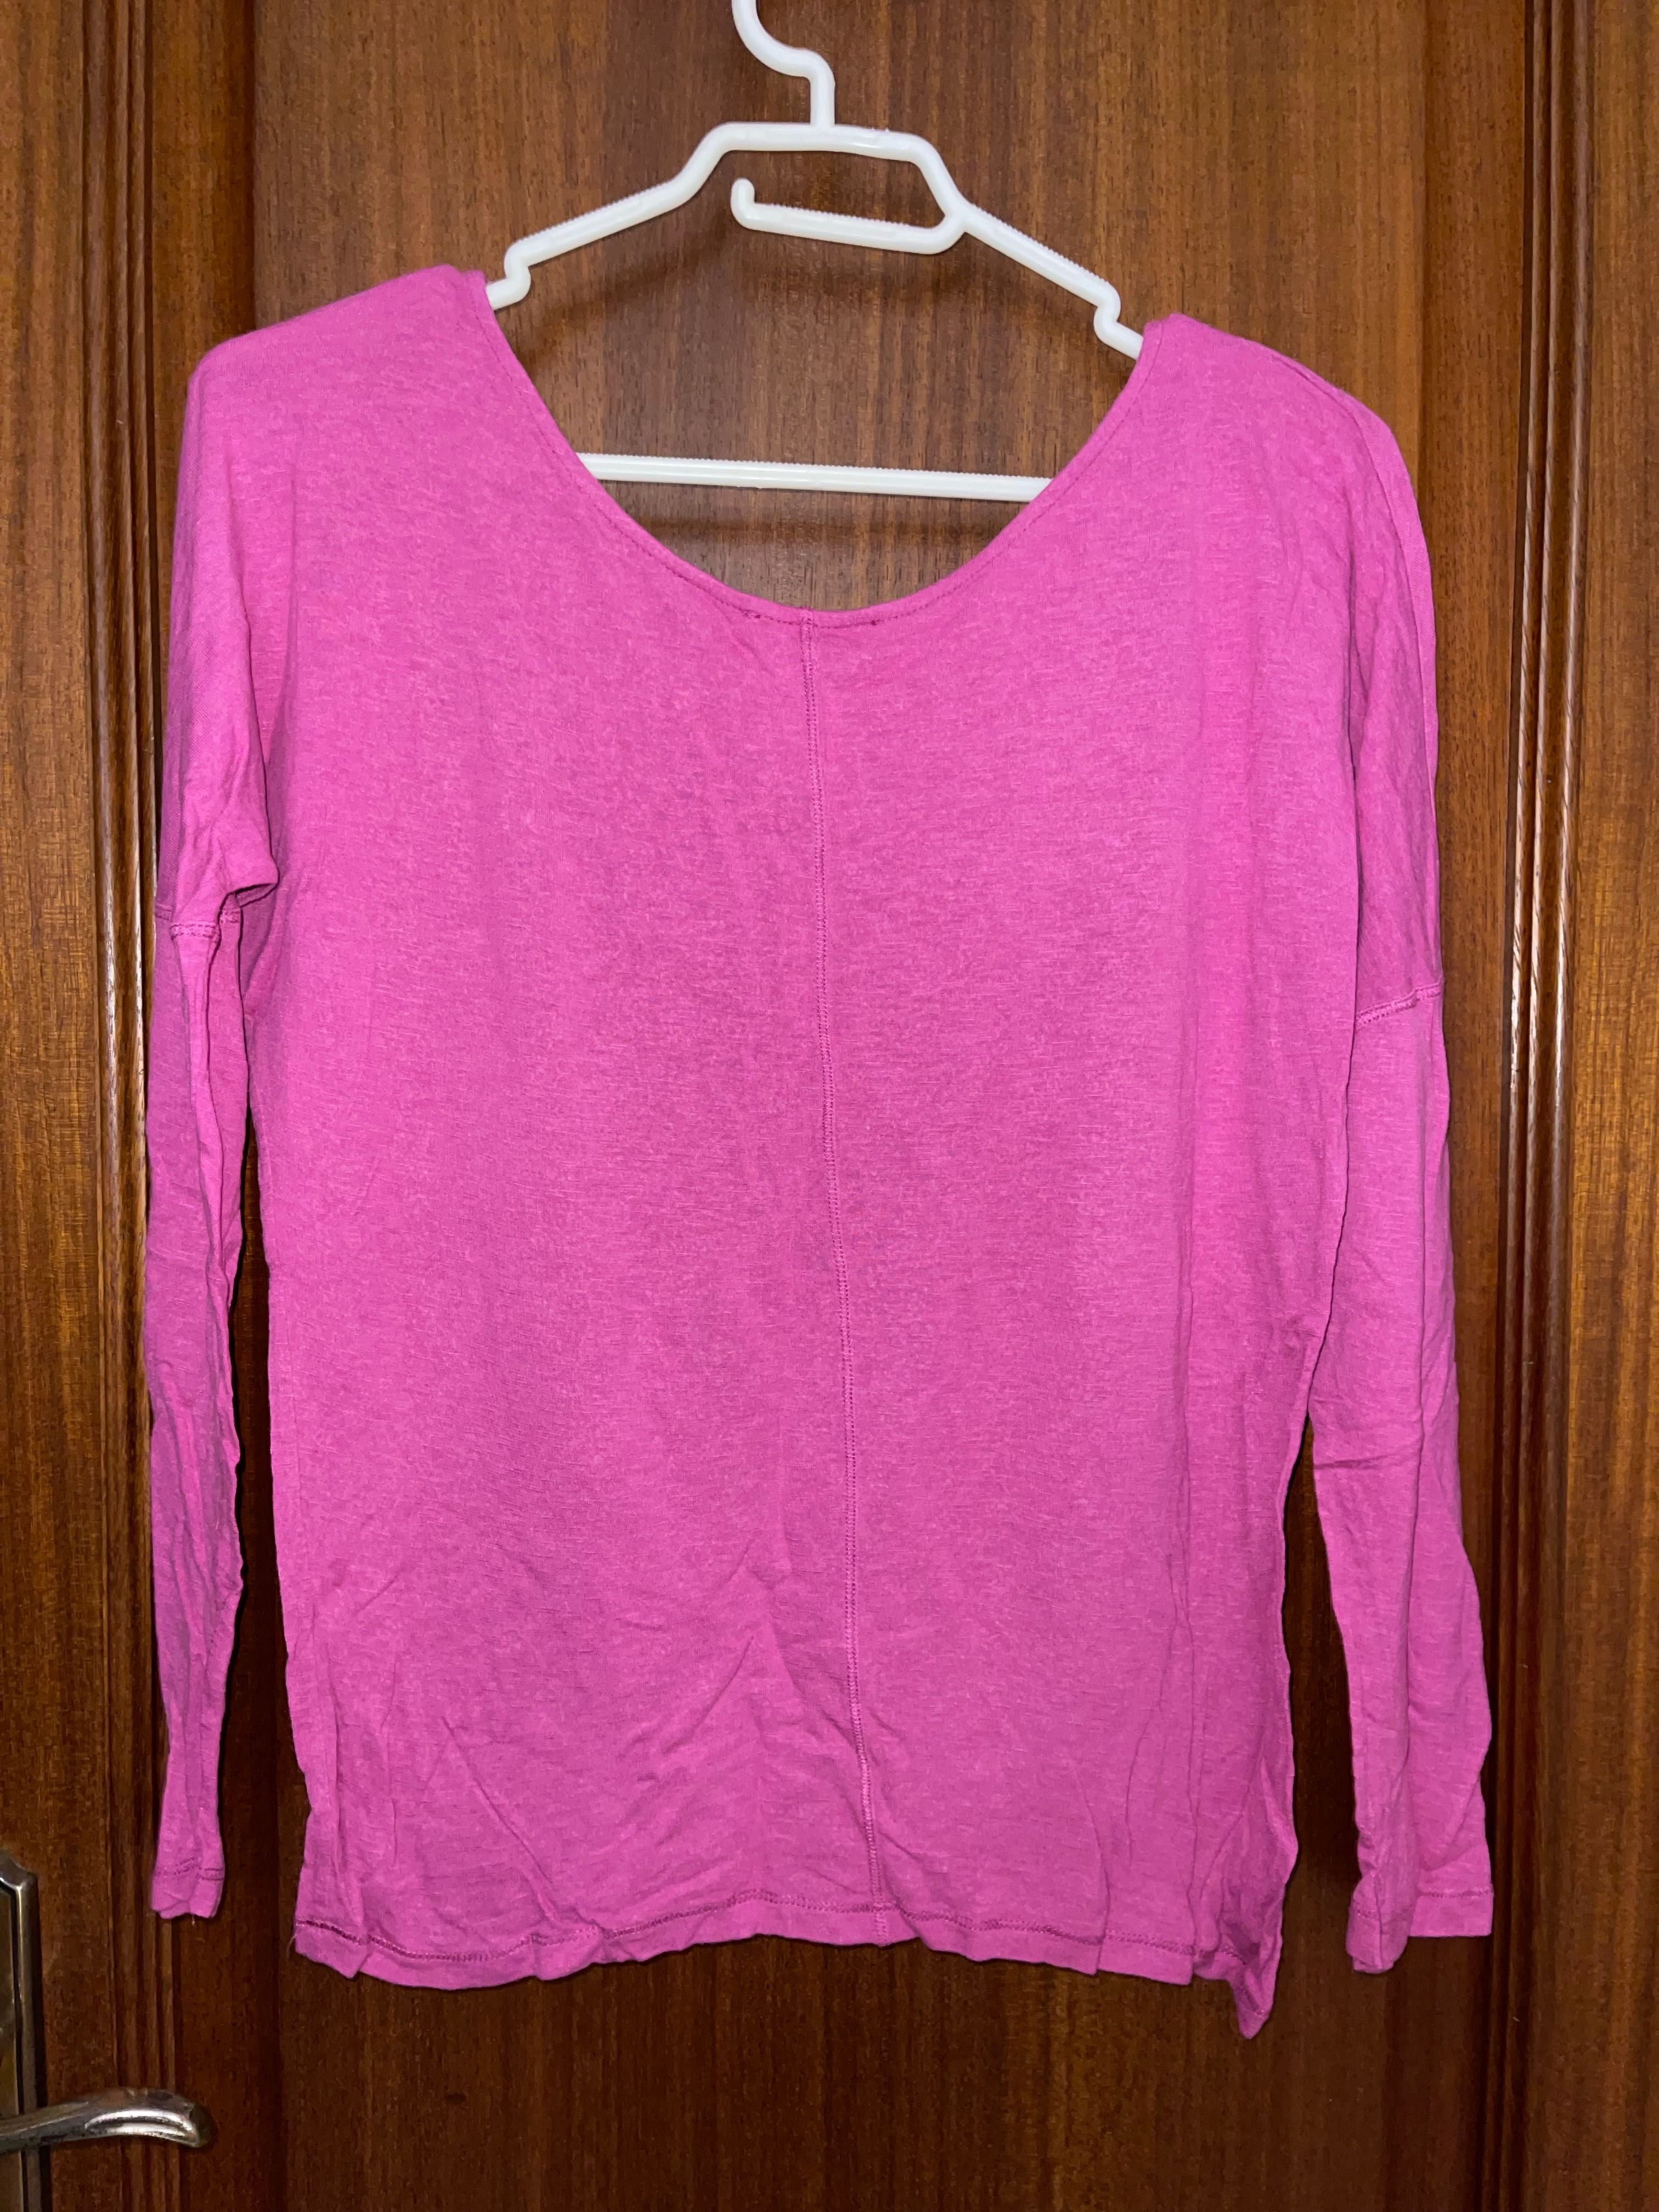 Camisola básica rosa da Promod